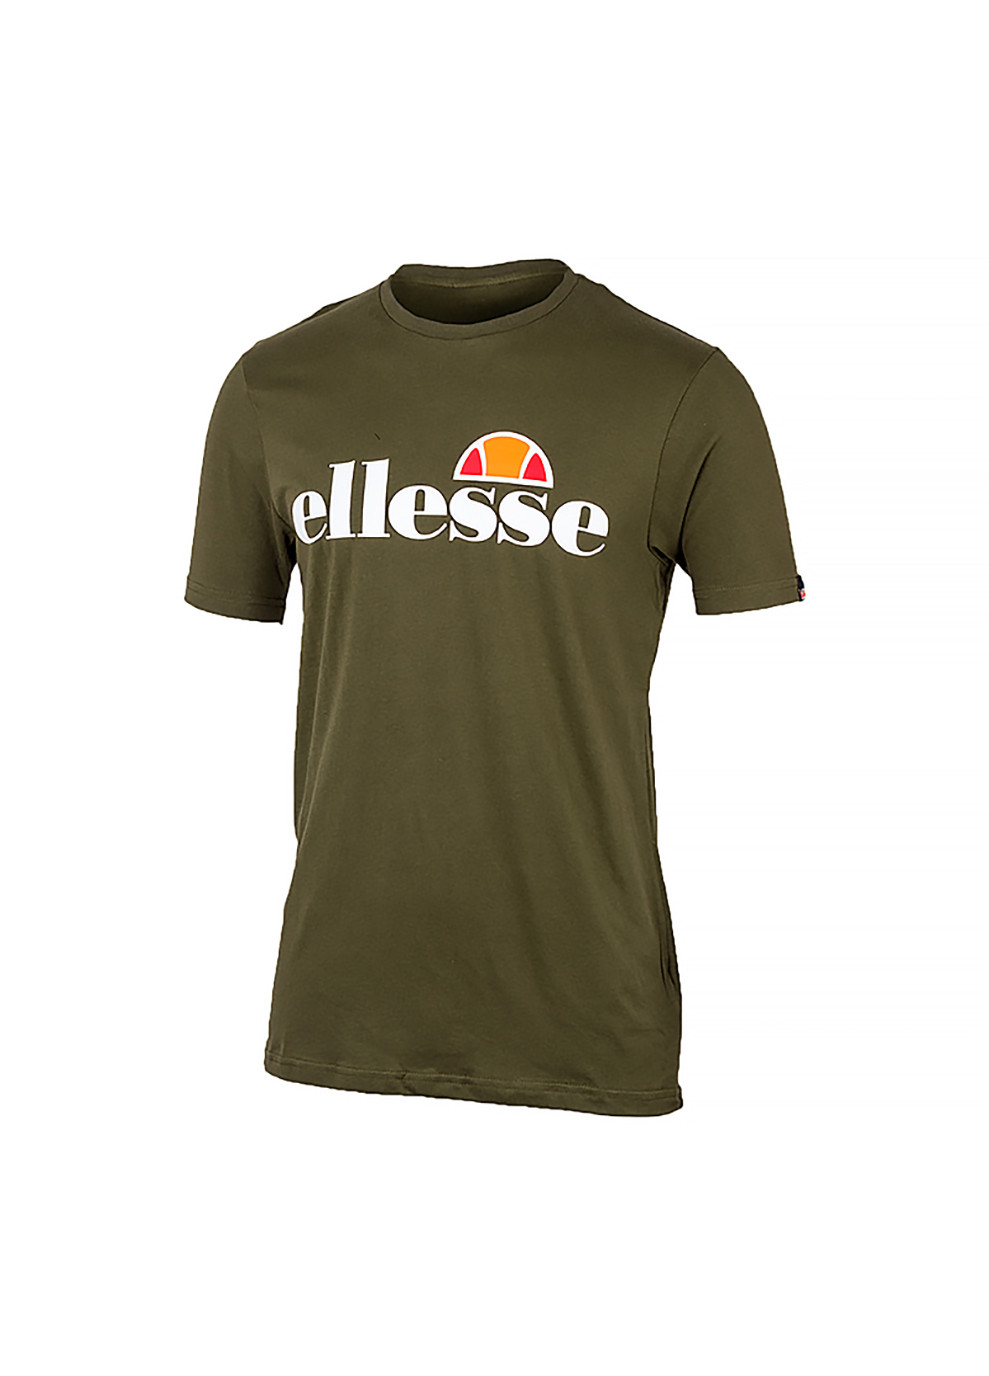 Хаки (оливковая) мужская футболка sl prado хаки xl (shc07405-khaki xl) Ellesse